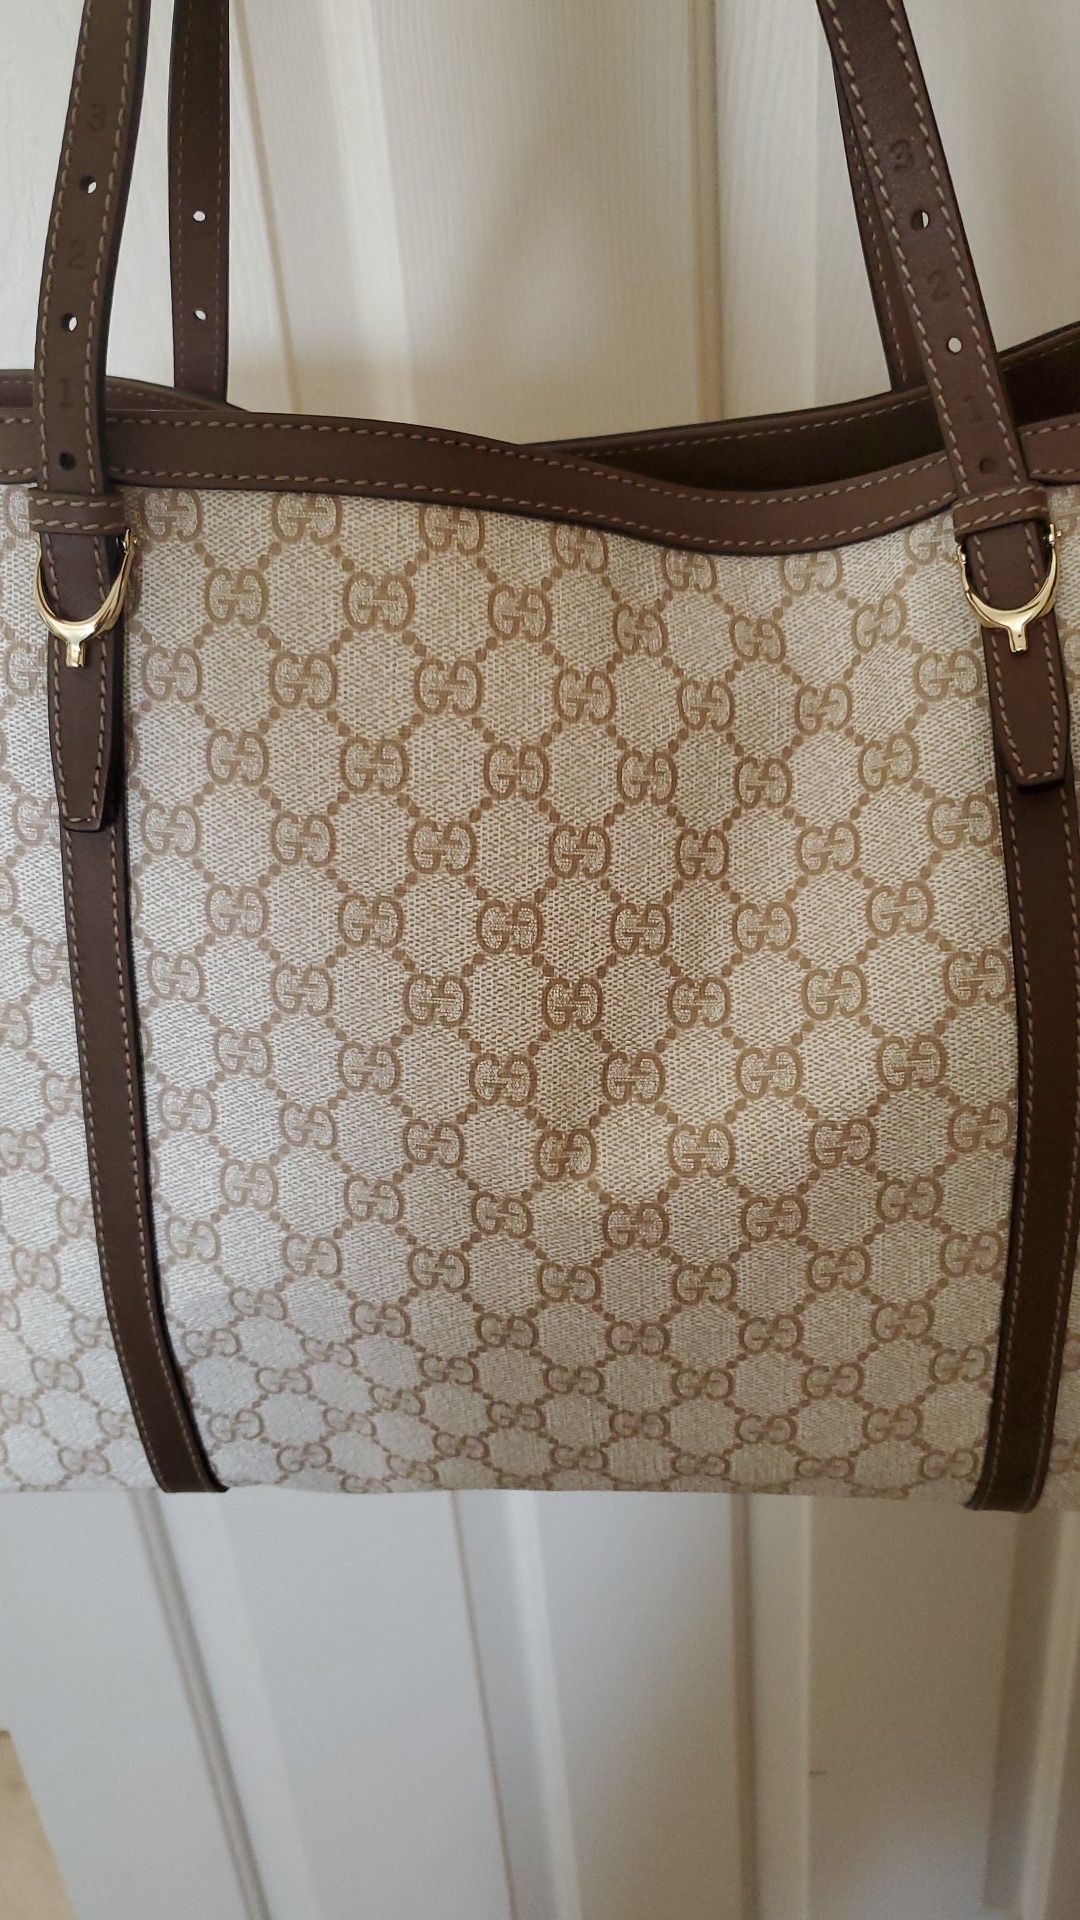 Gucci signature tote bag